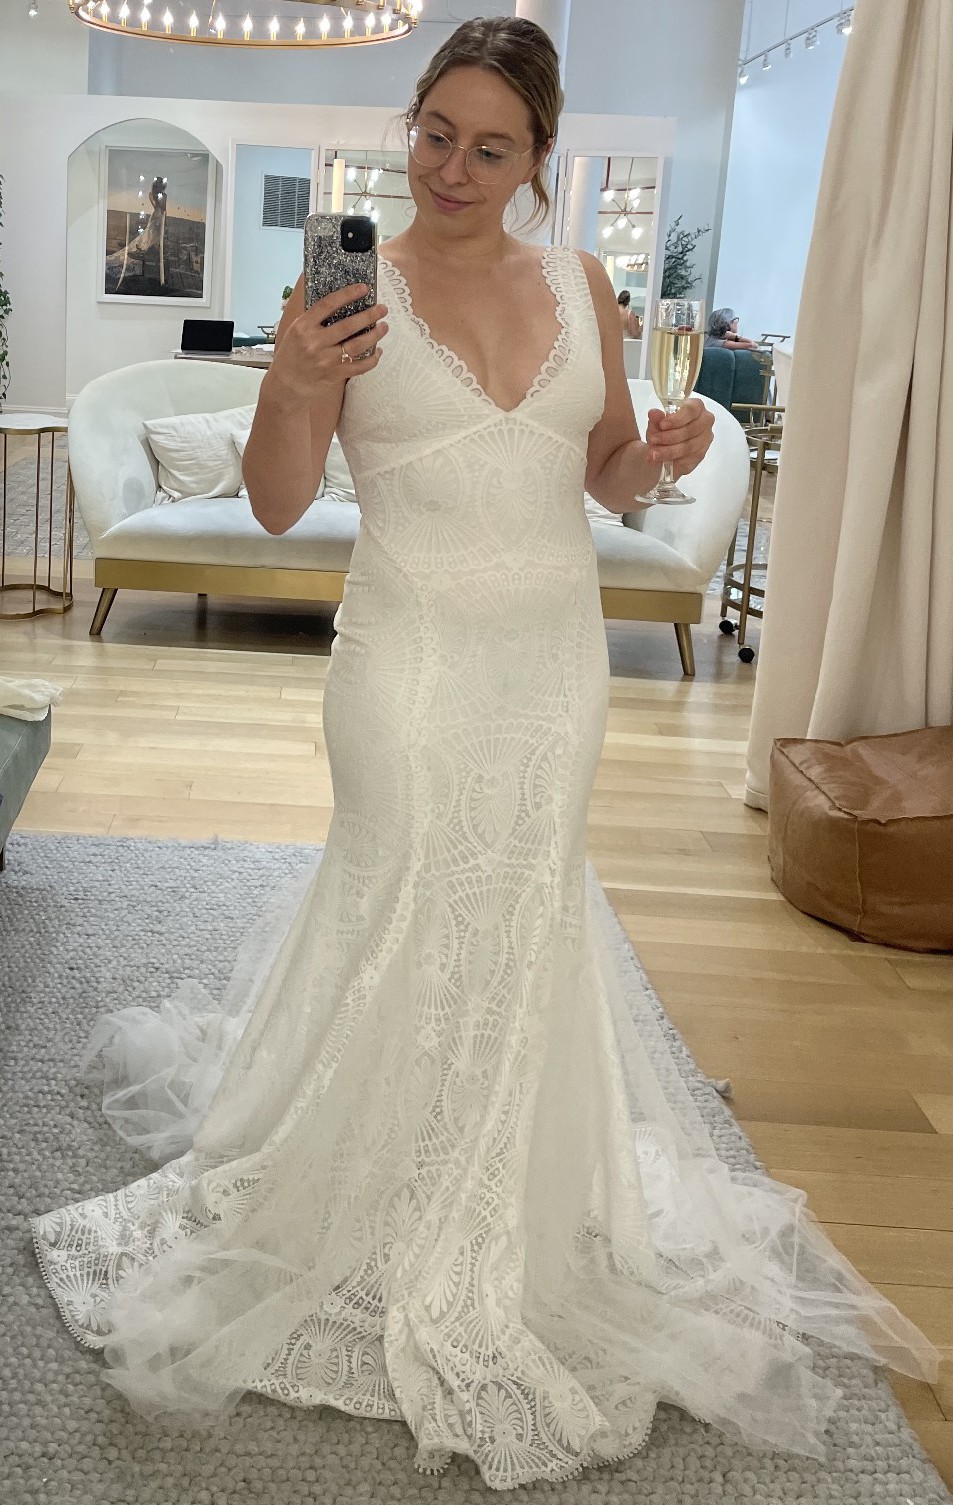 Lumi Gown, Ready to Wear Wedding Dress